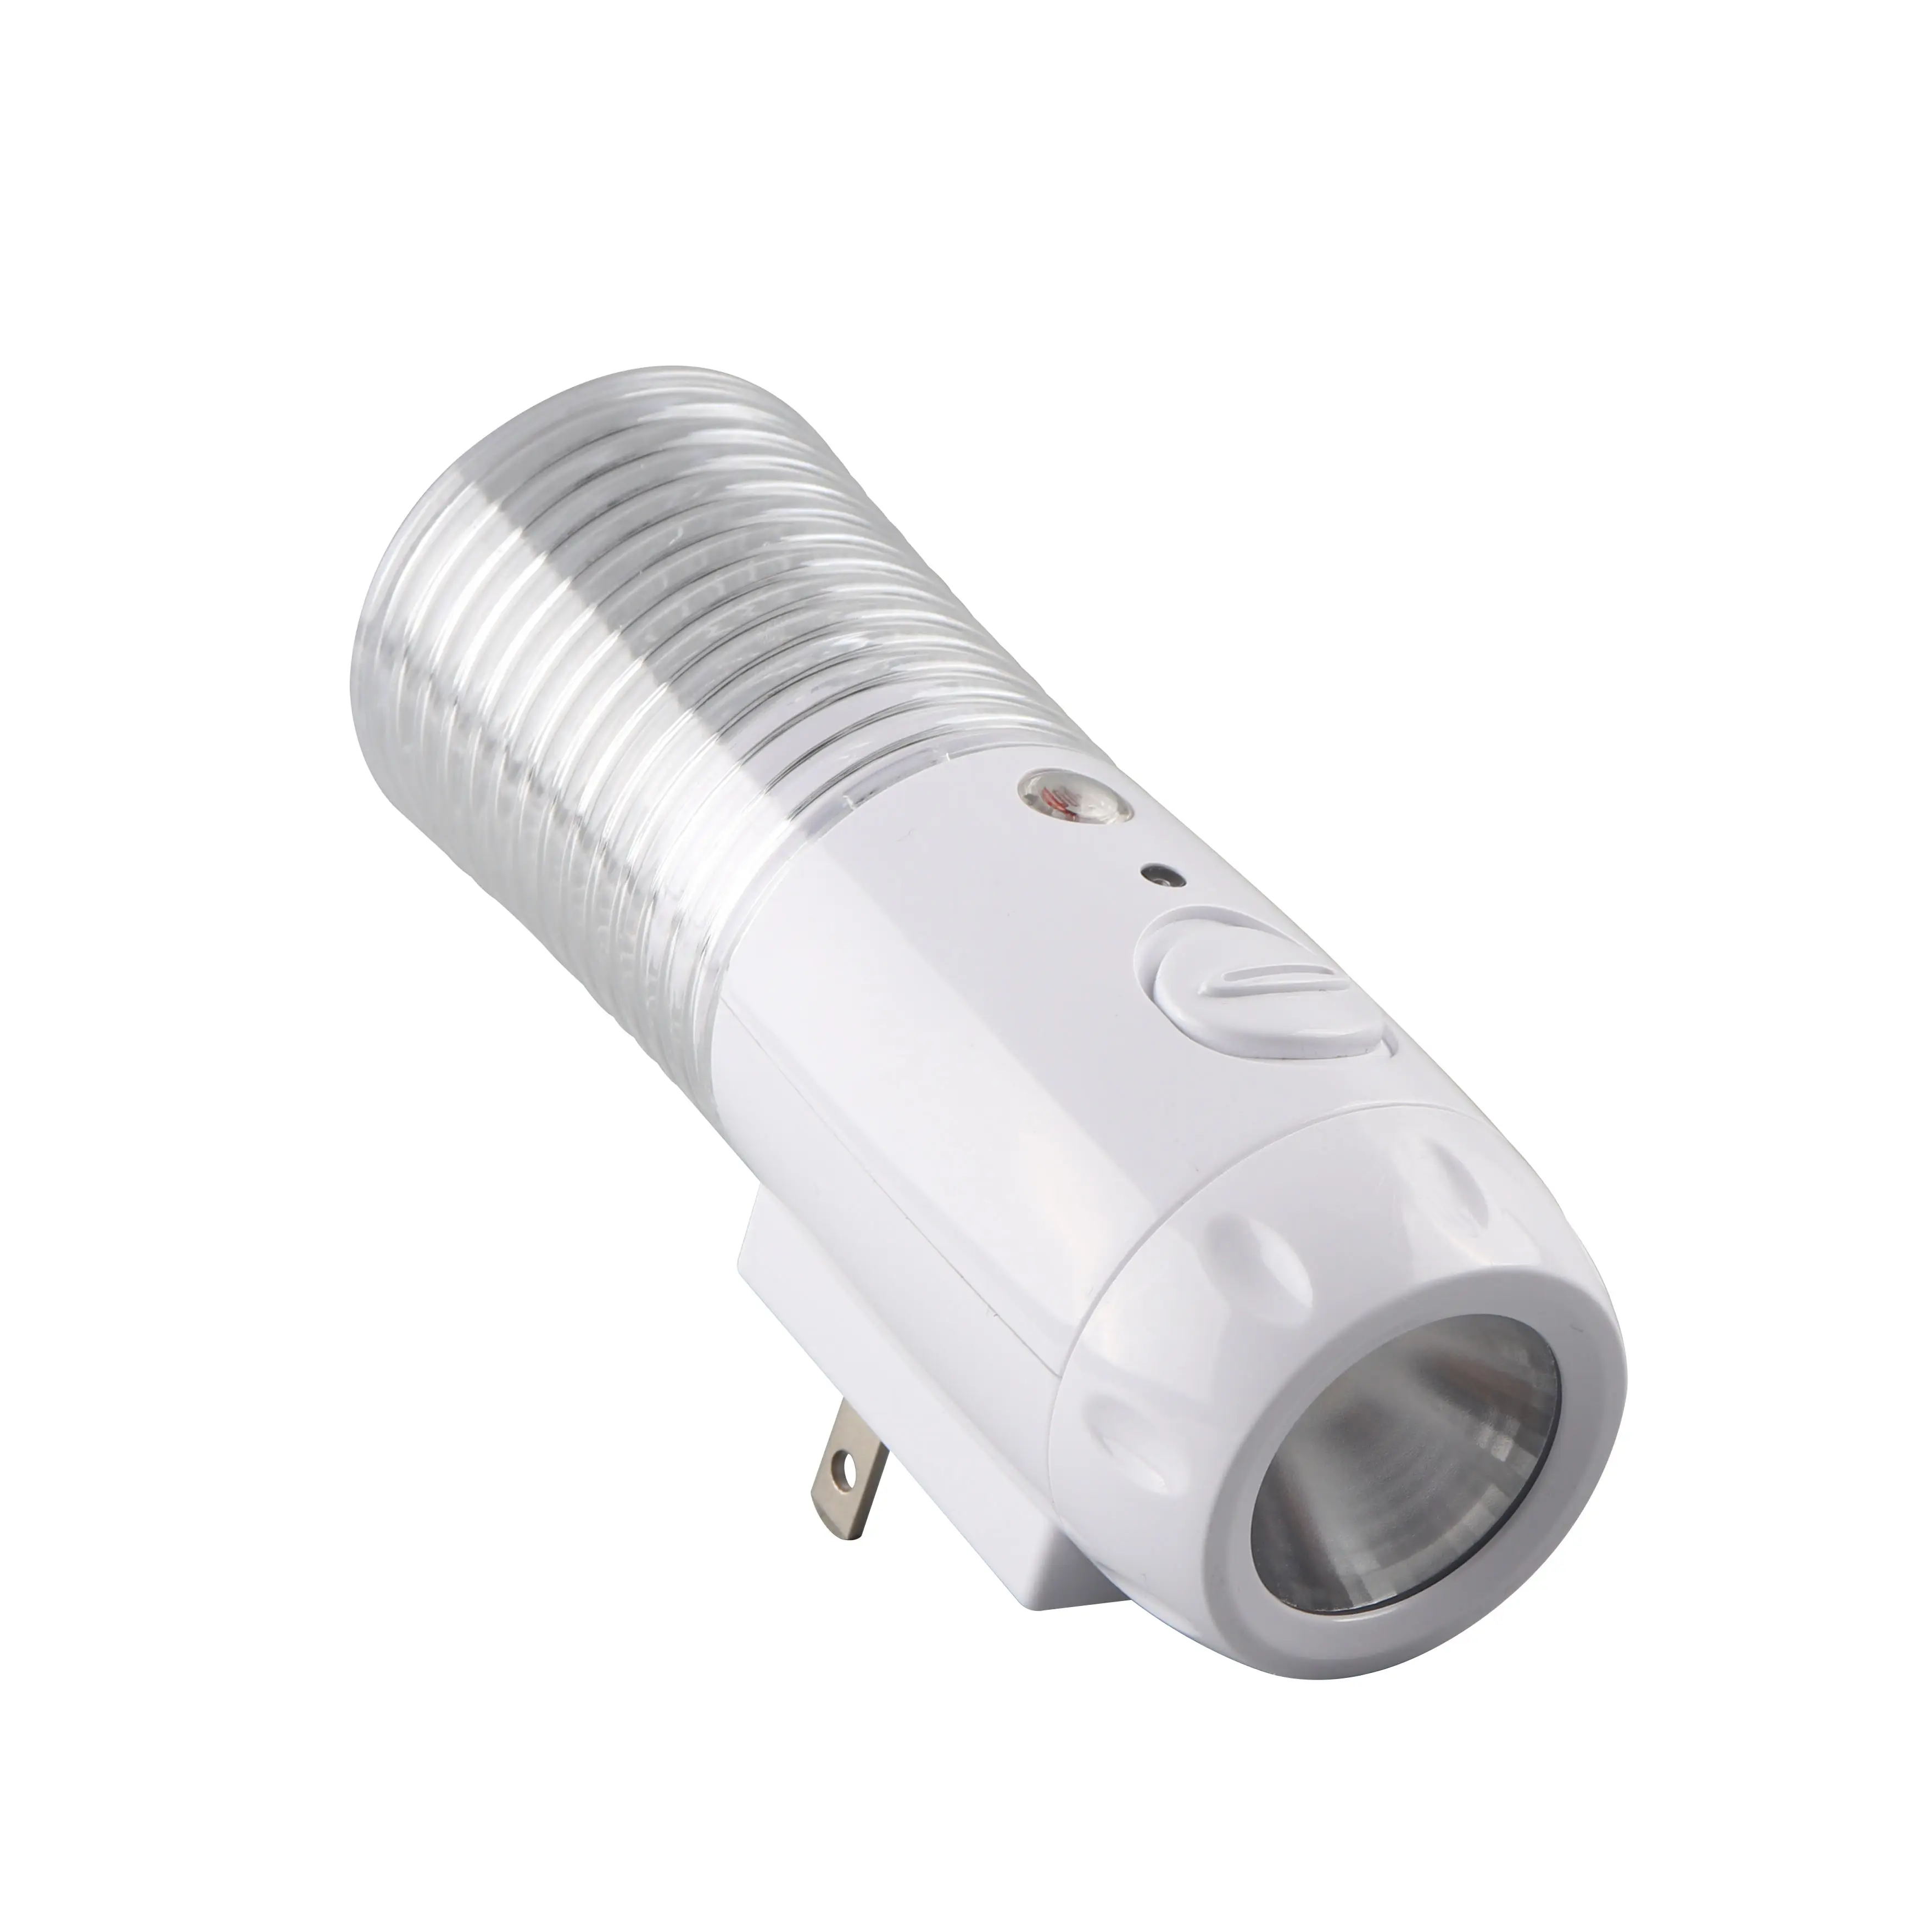 Multi-function Smart Home Lights LED handheld Plug Night Light Rechargeable flashlight